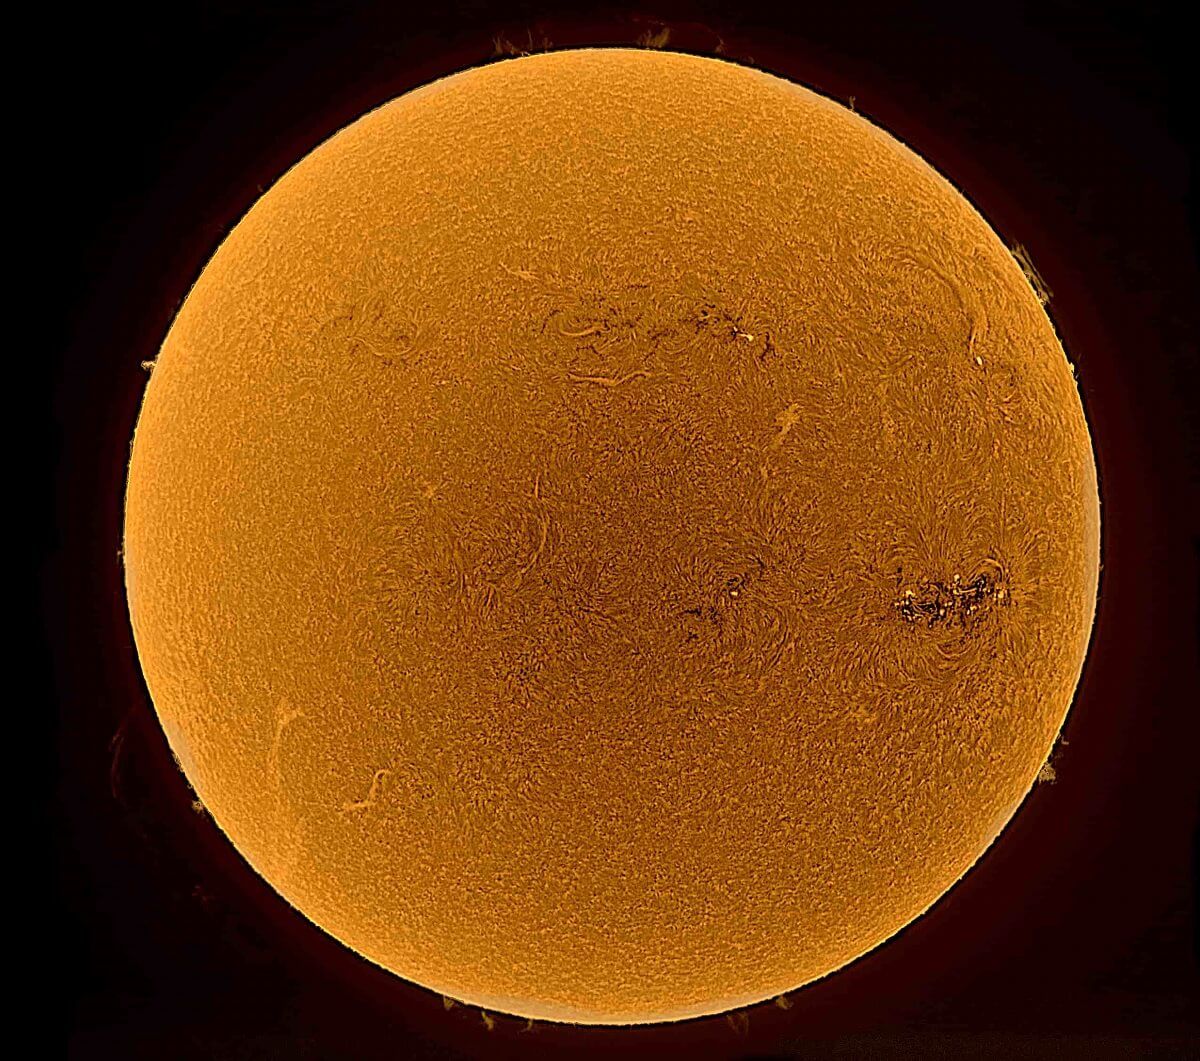 Chromosfera Słońca